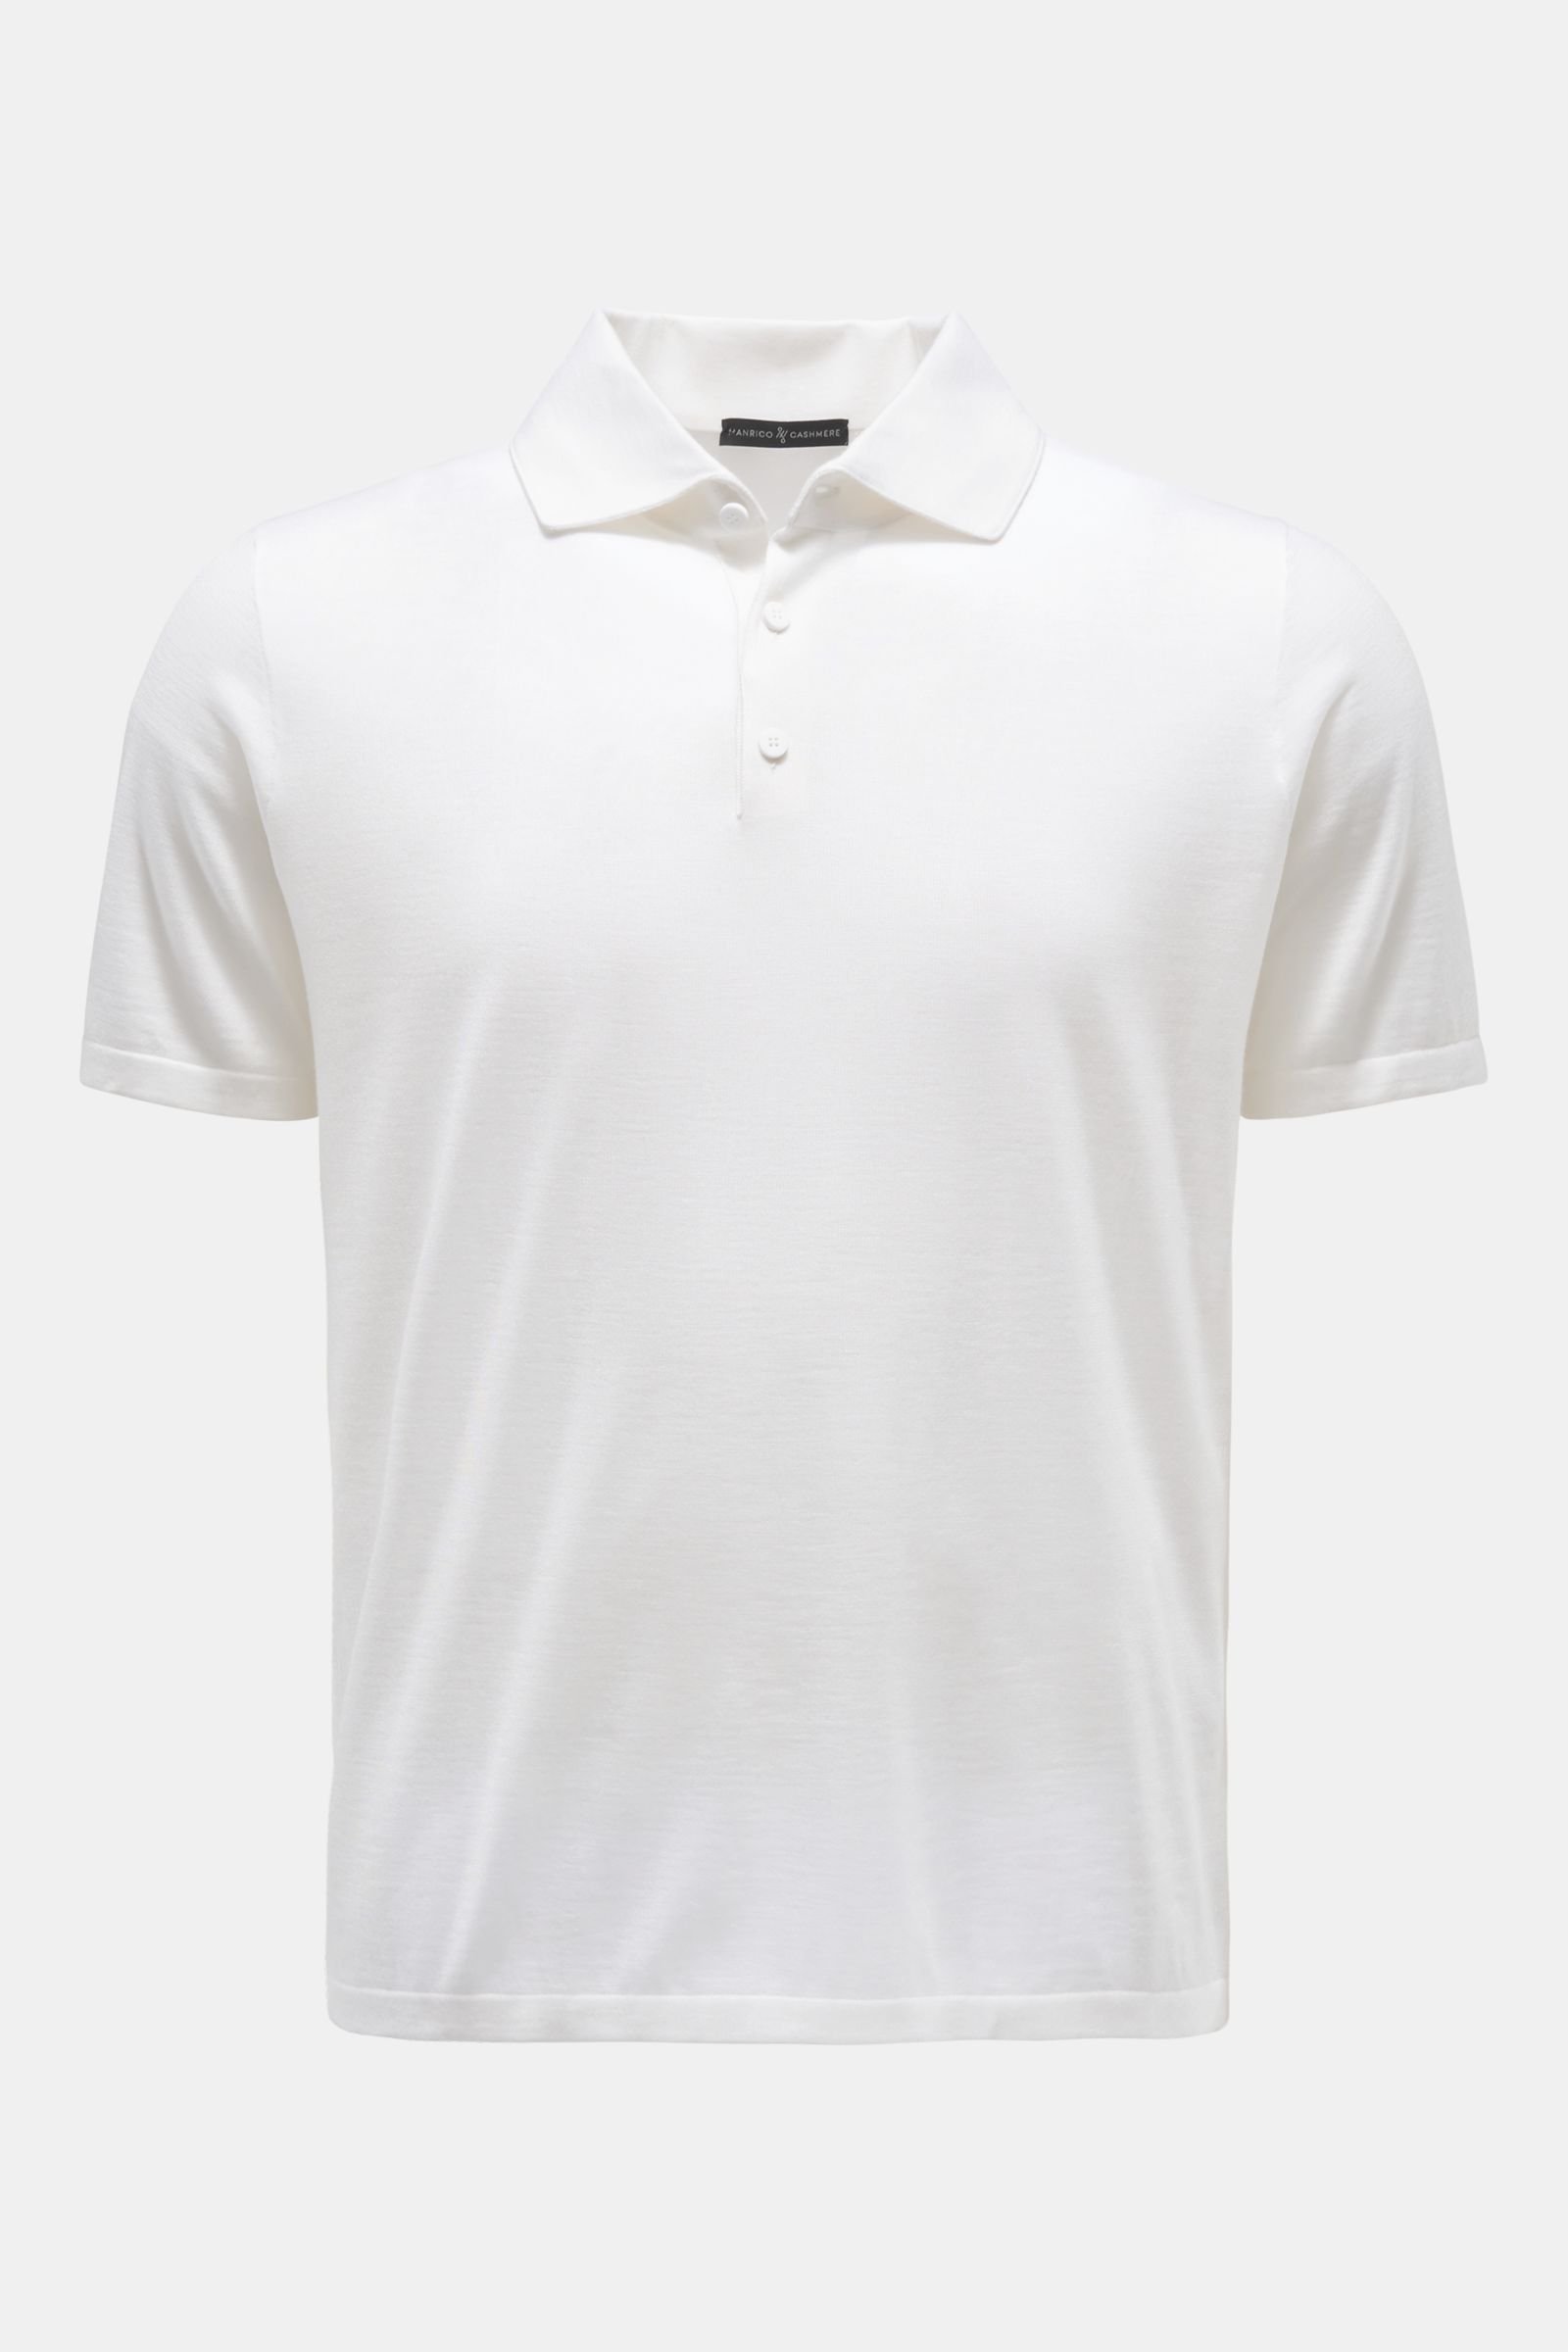 Cashmere fine knit polo shirt white